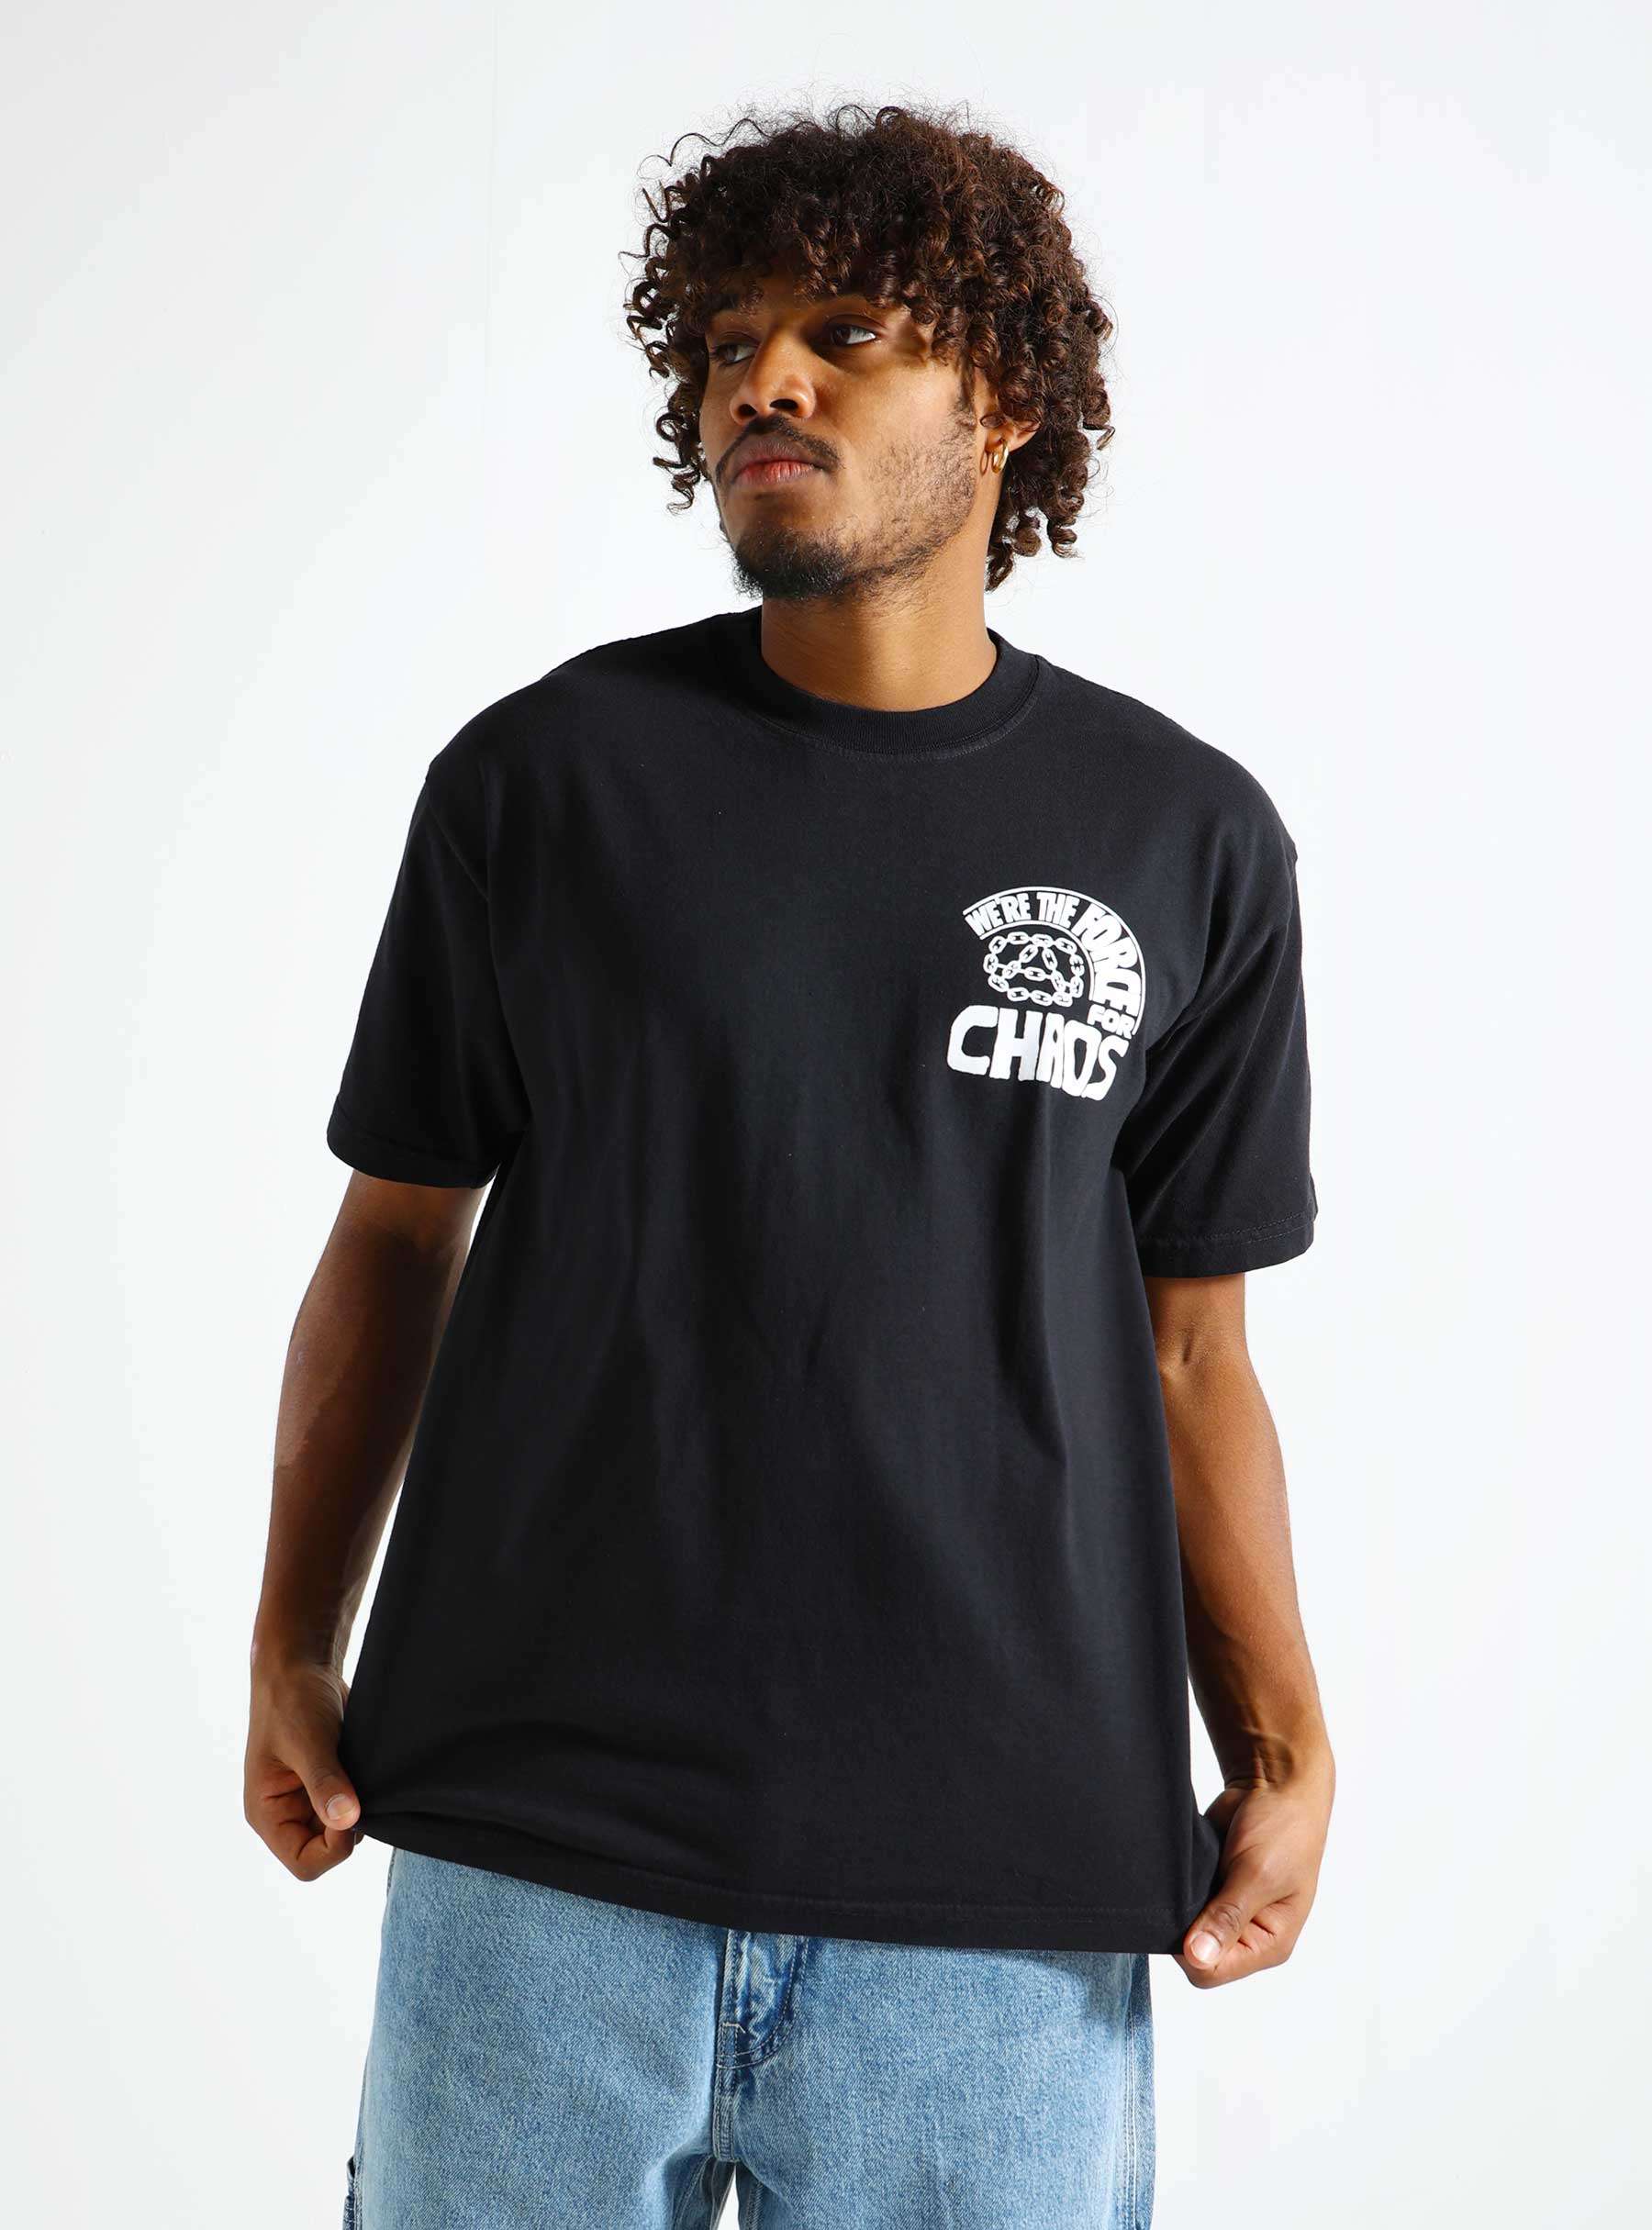 Obey Peace Program Vintage T-shirt Black 166913704-VBL